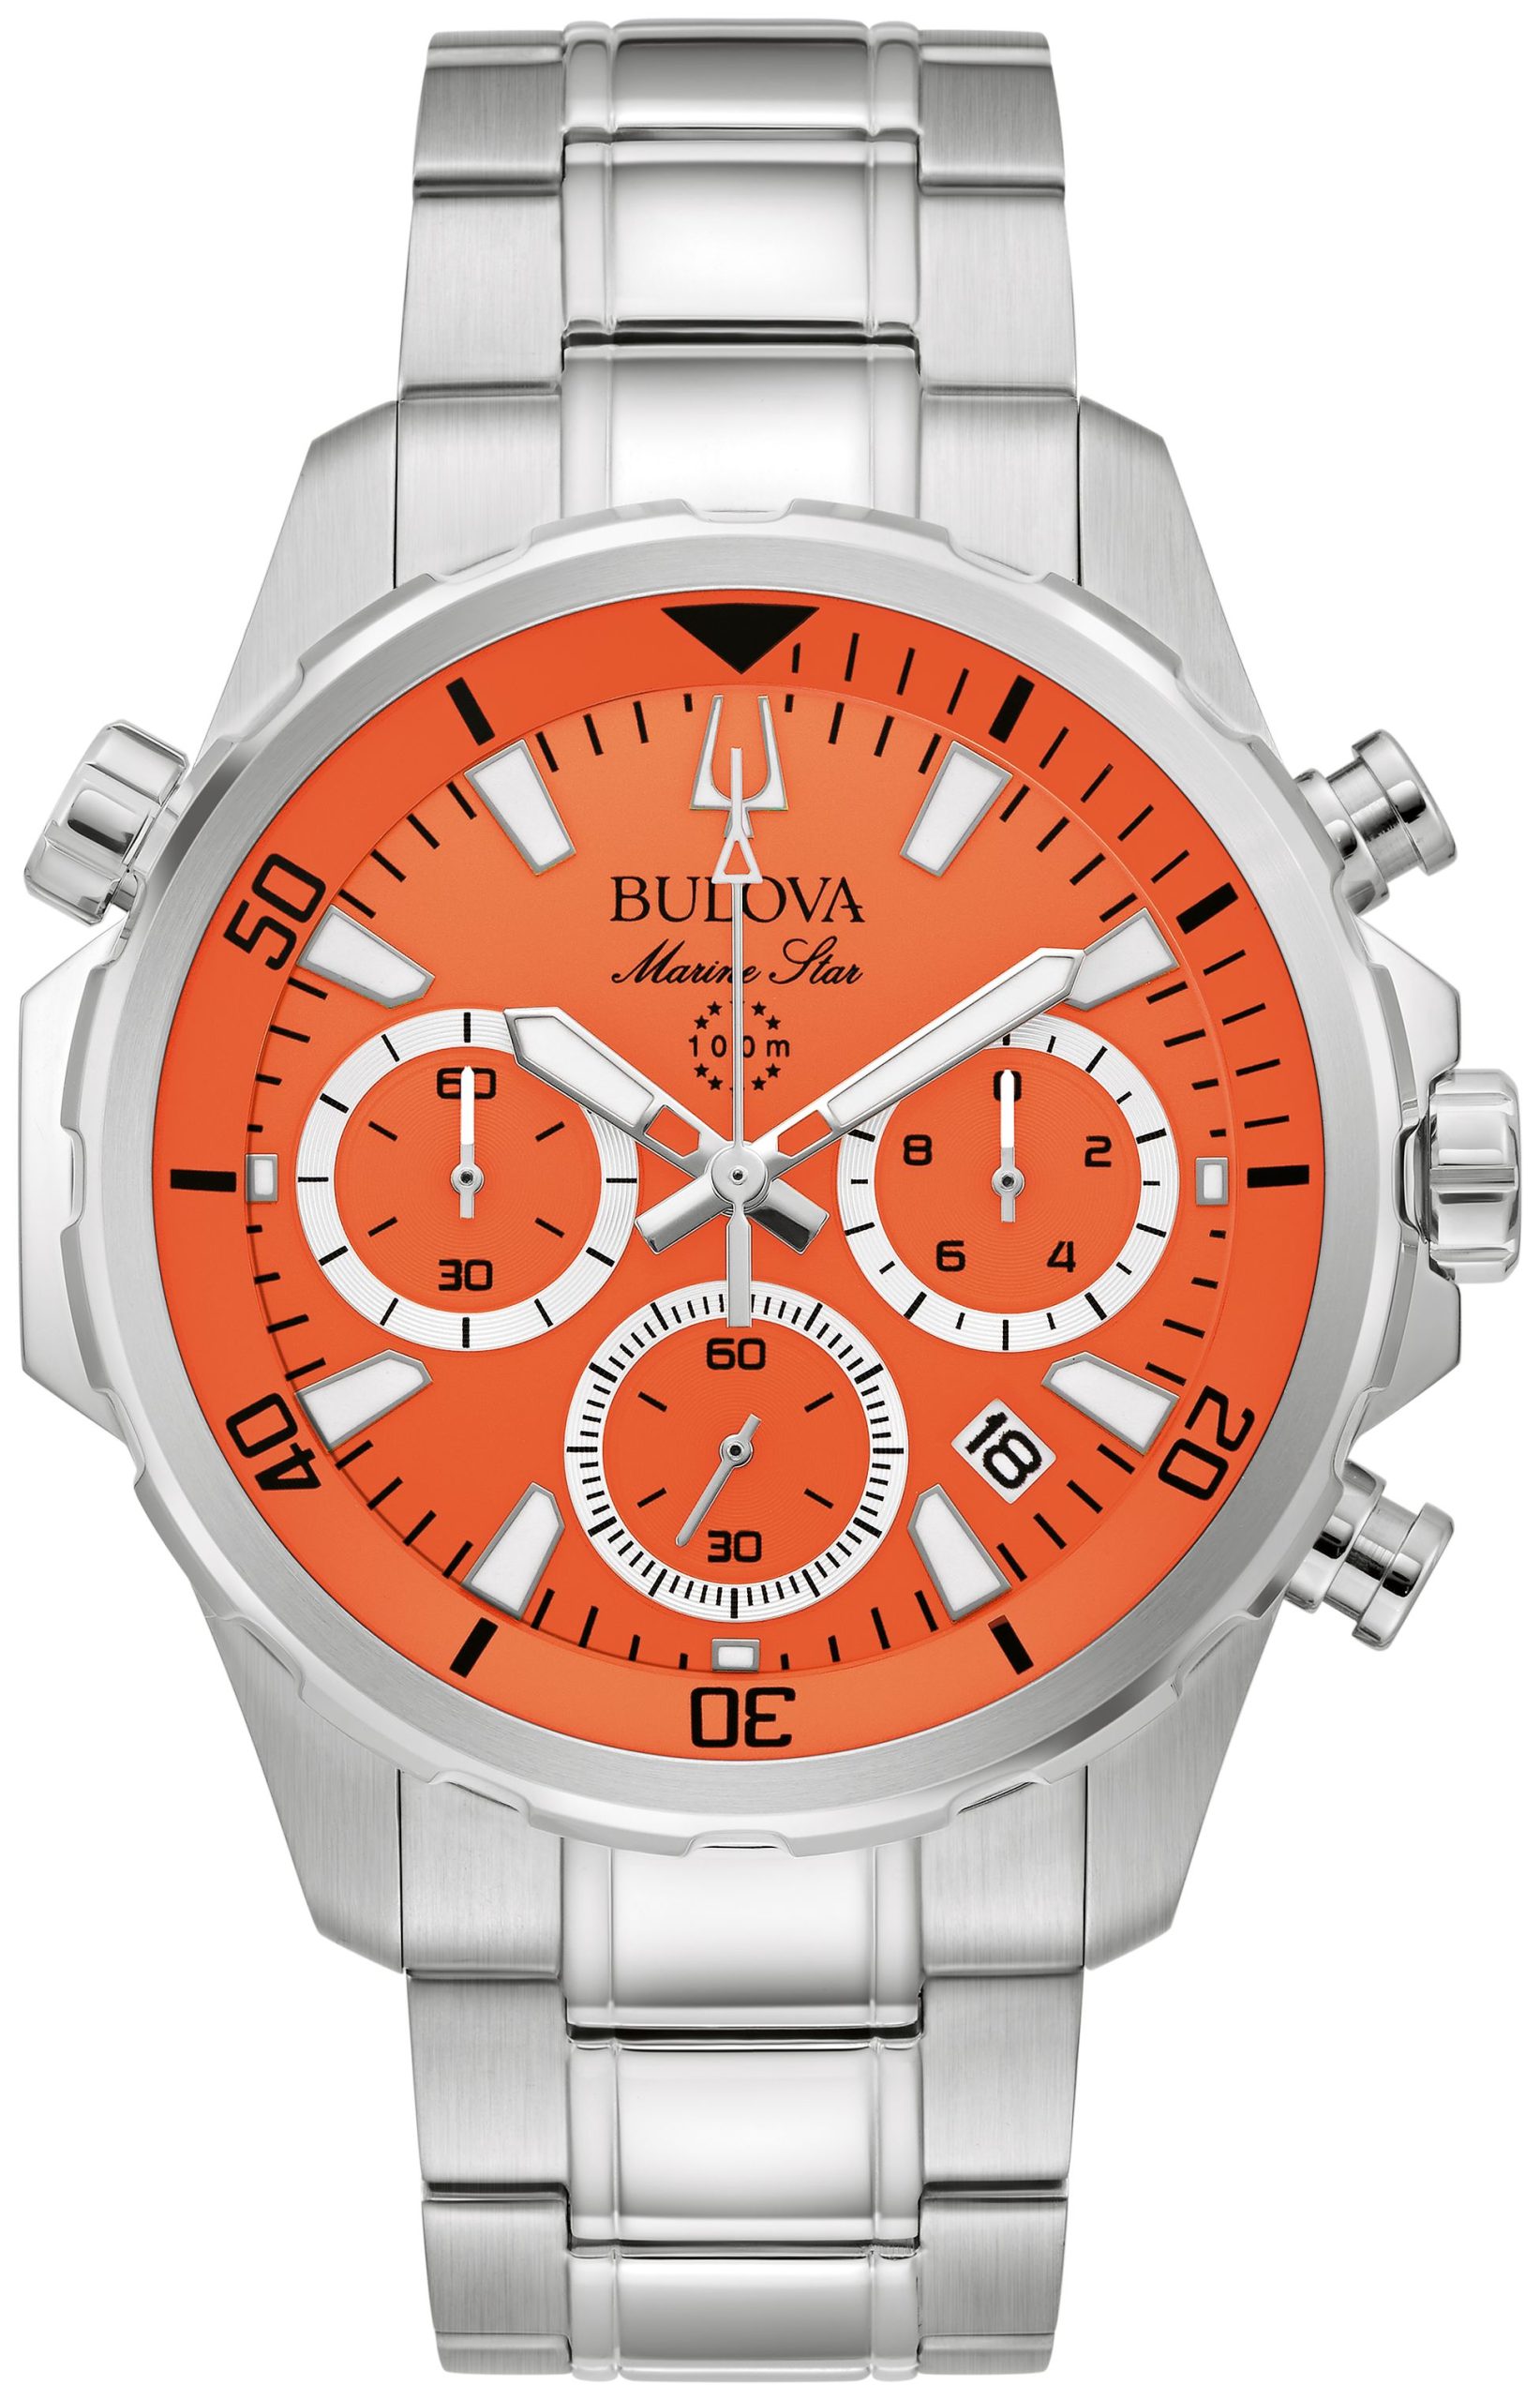 Bulova Series “B” chronograph watch